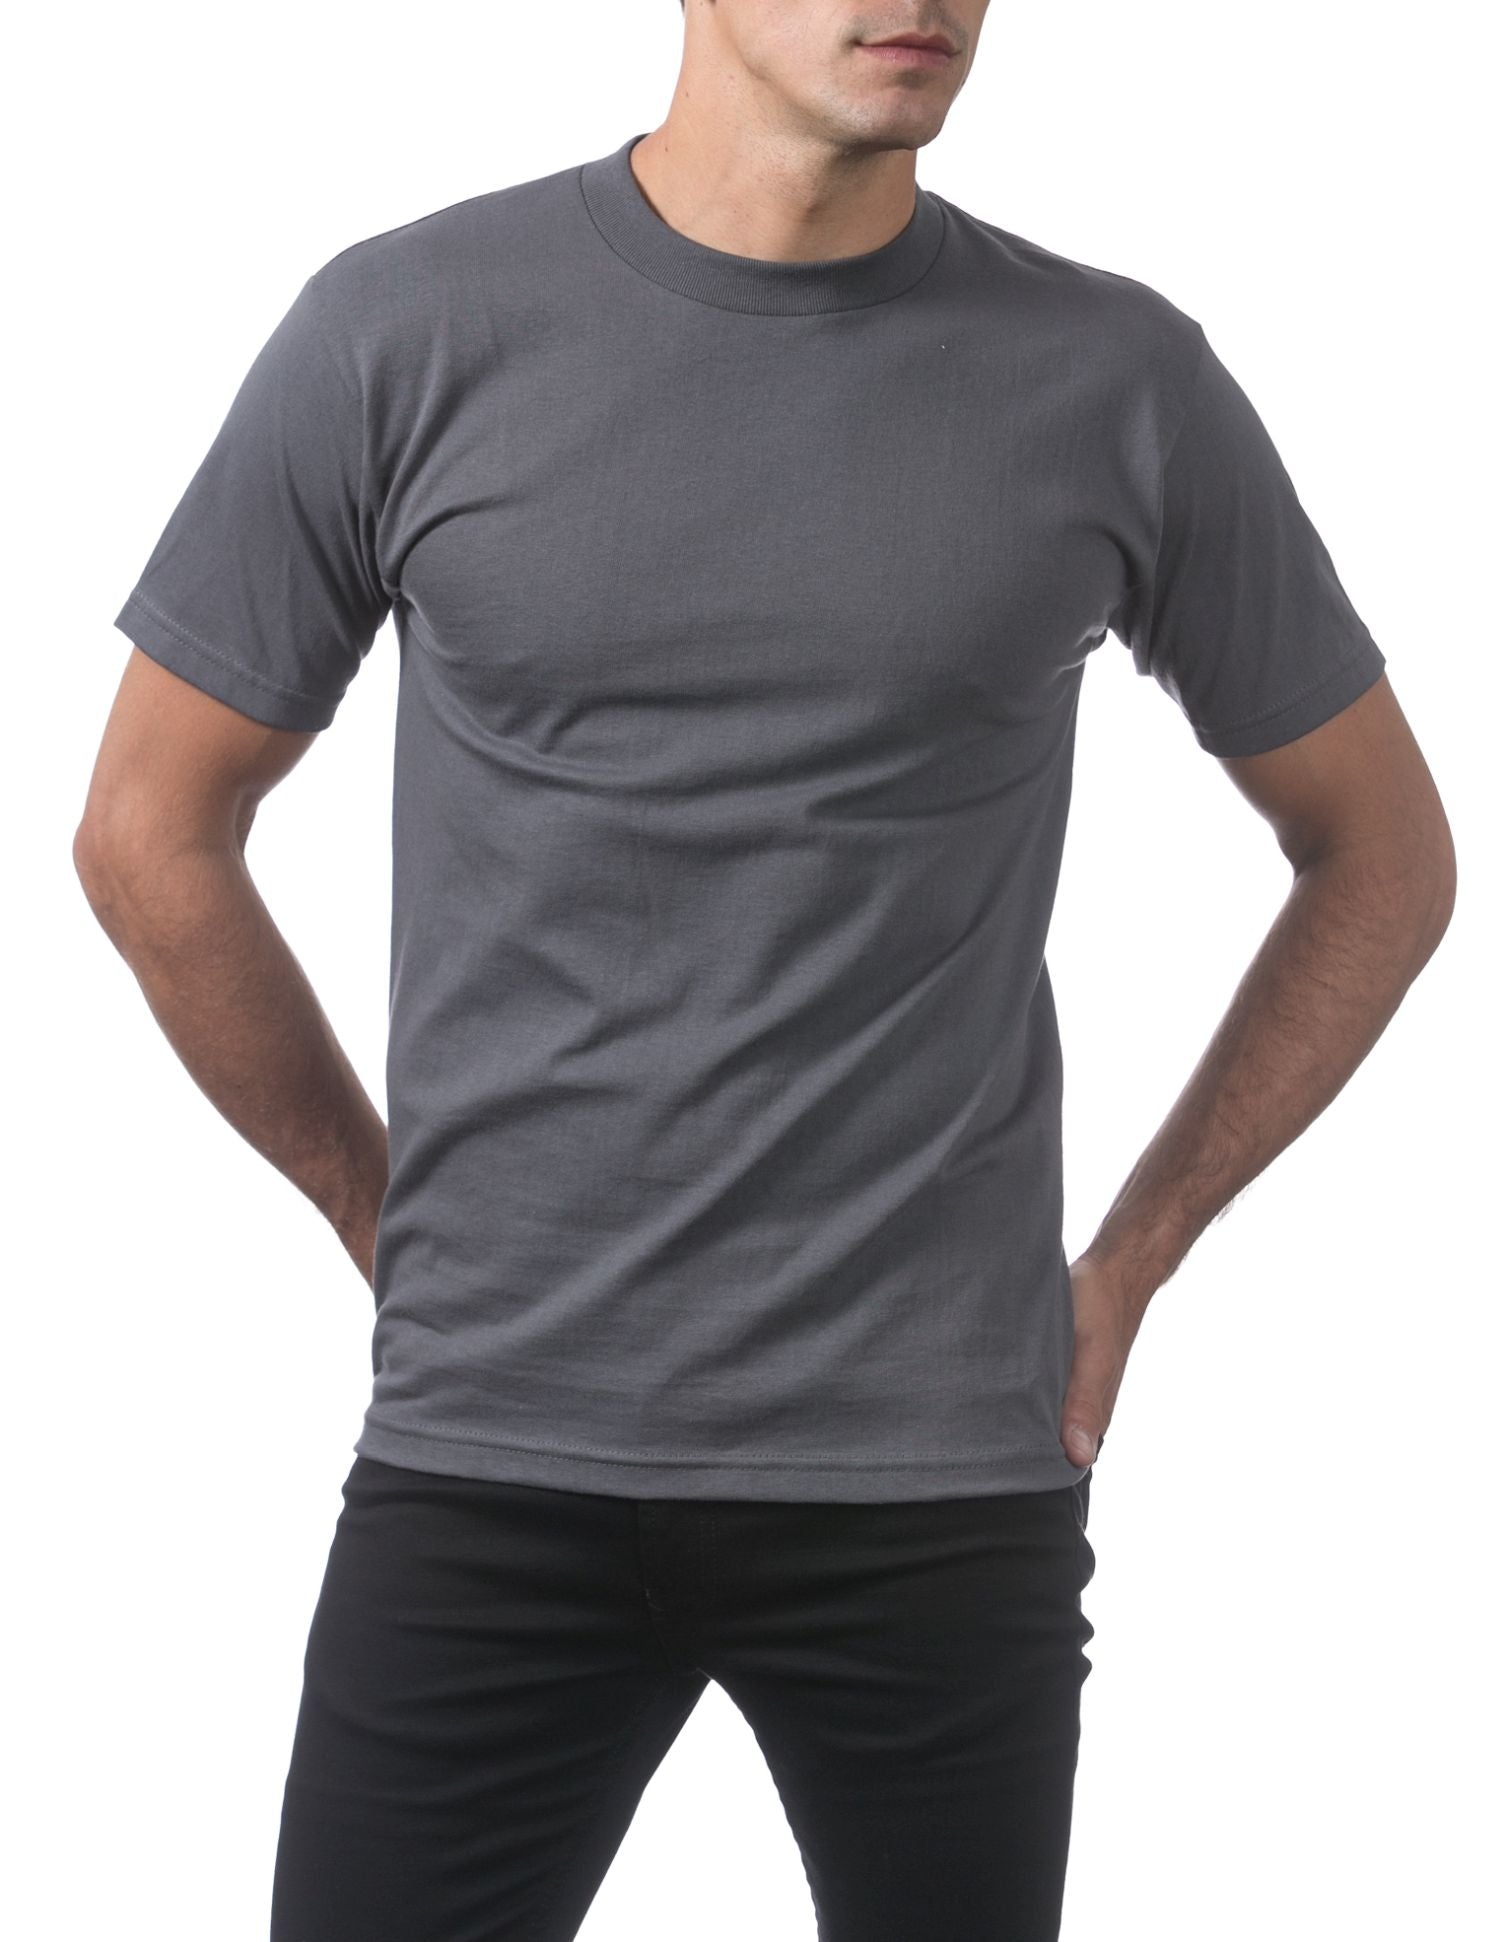 Pro Club Men's Comfort Cotton Short Sleeve T-Shirt - Graphite - Large - Pro-Distributing